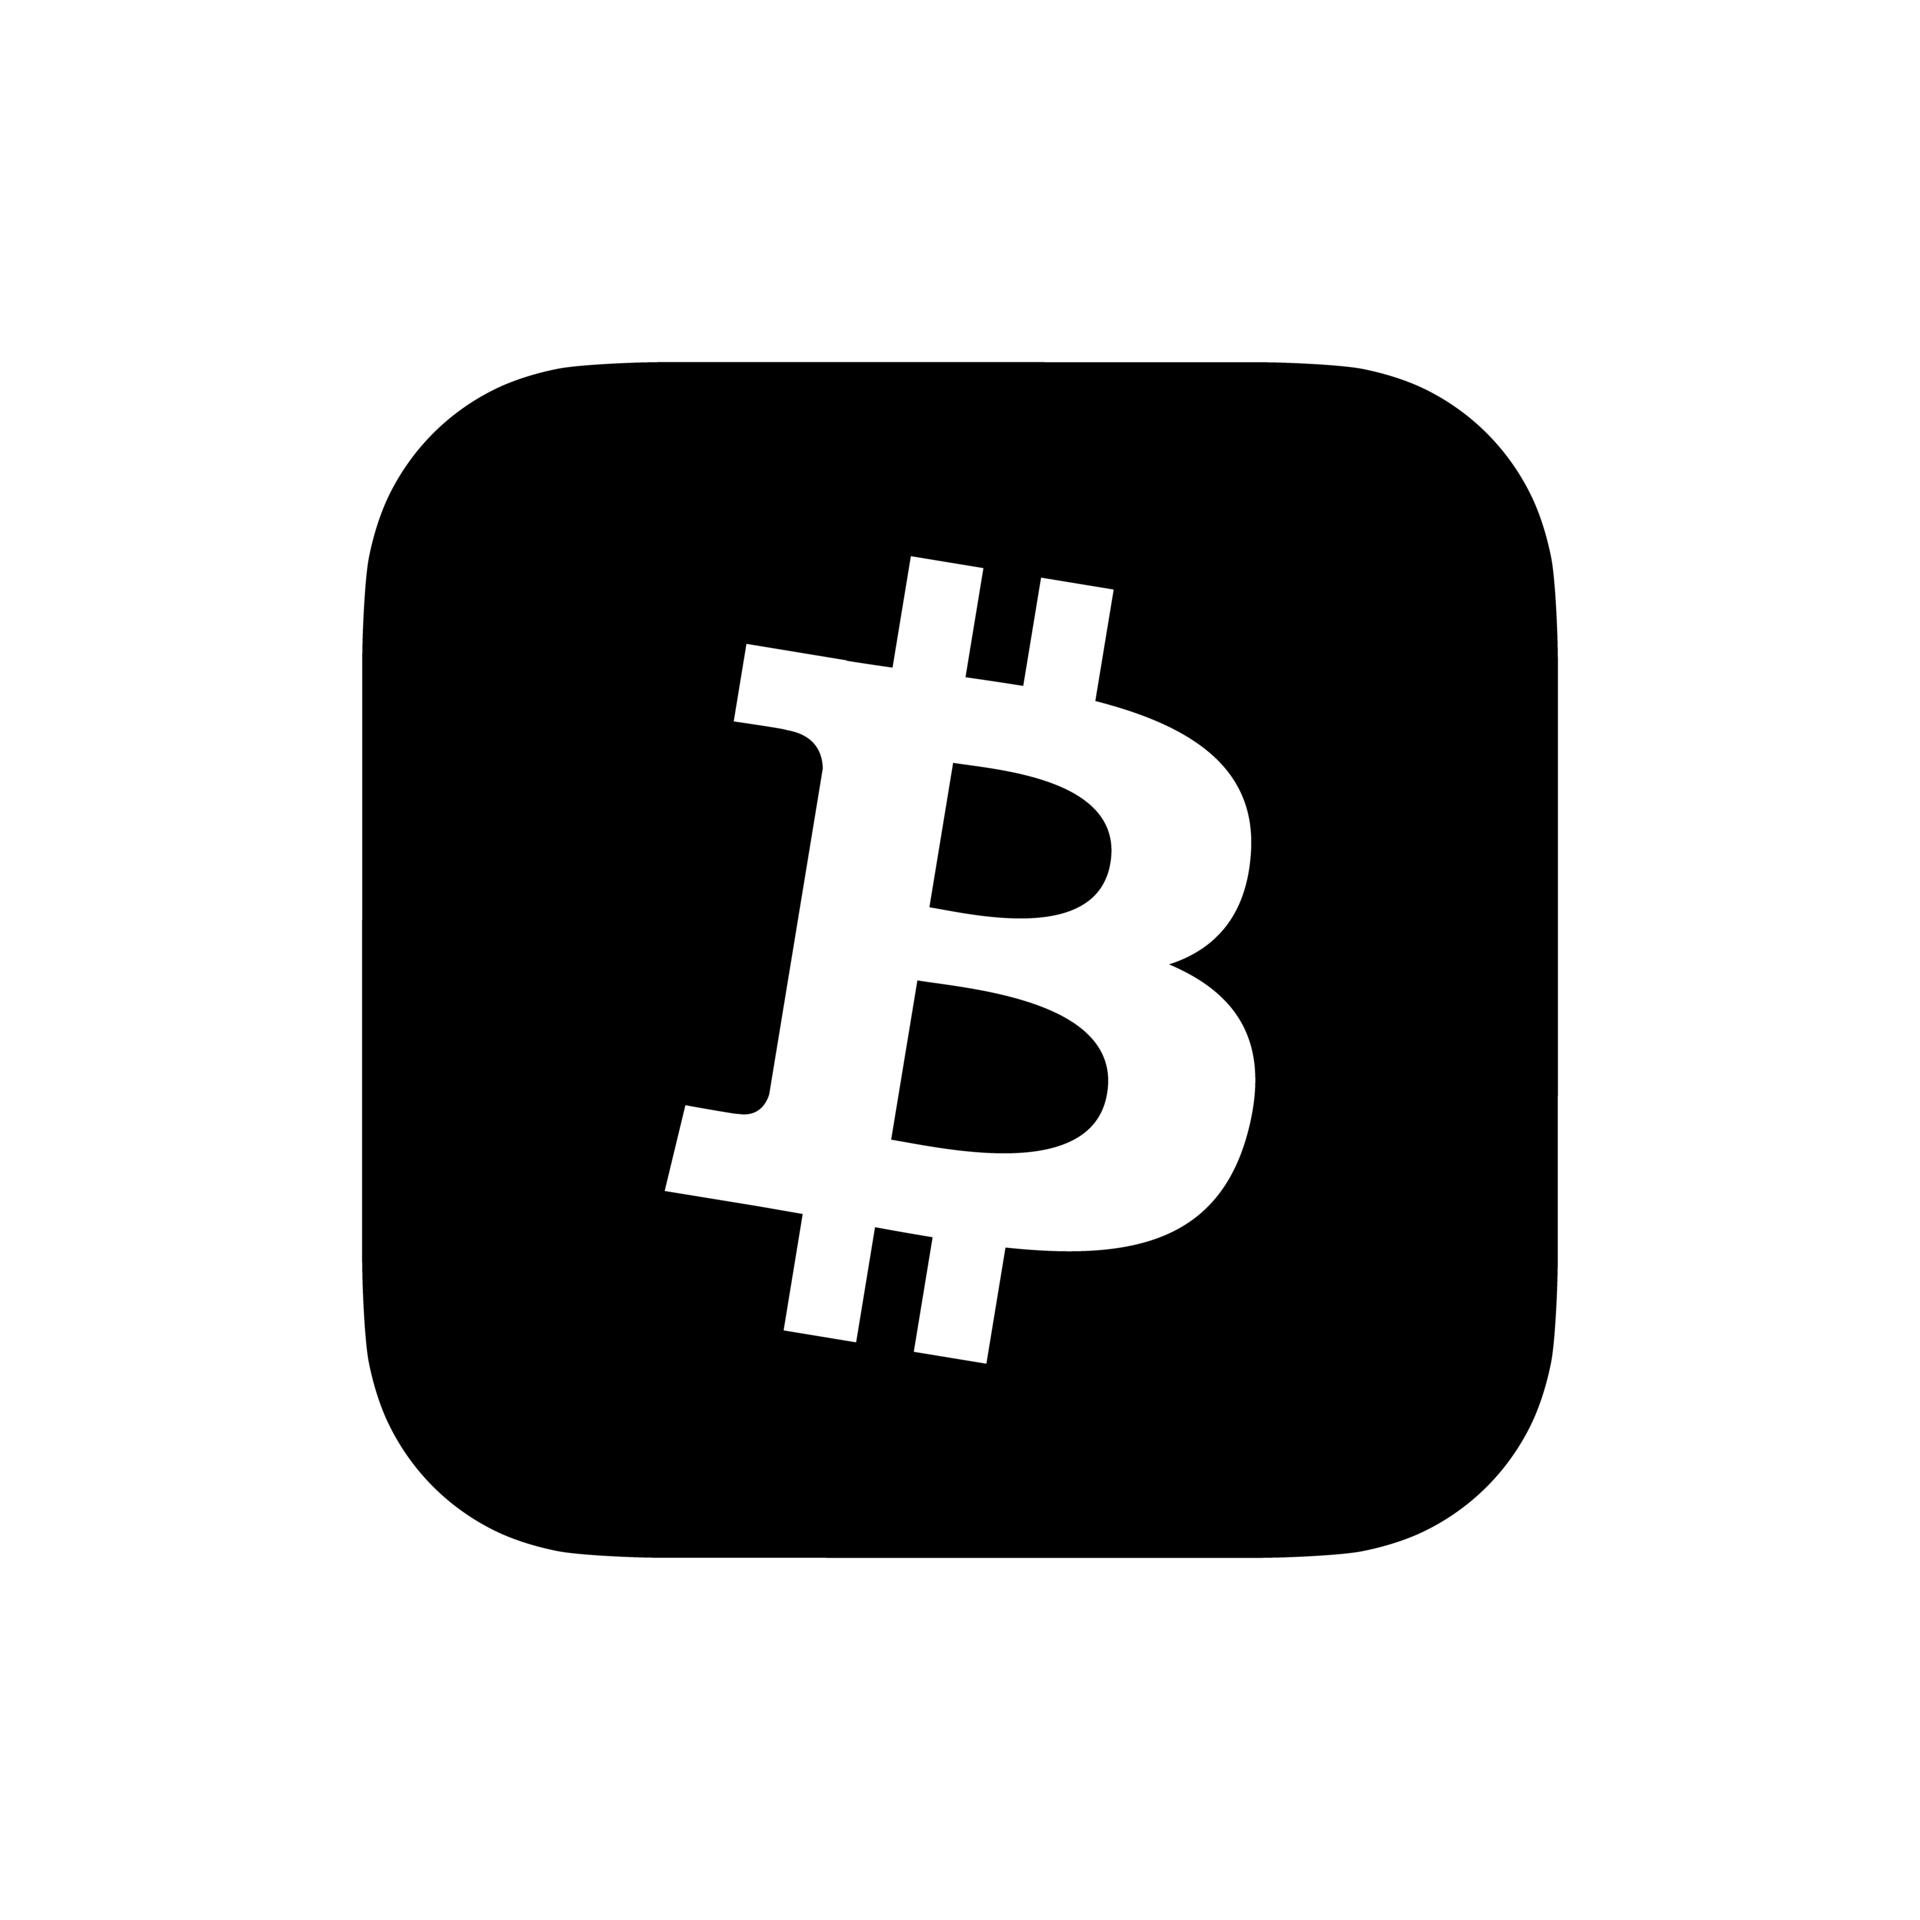 Bitcoin Logo Images – Browse 63,376 Stock Photos, Vectors, and Video |  Adobe Stock